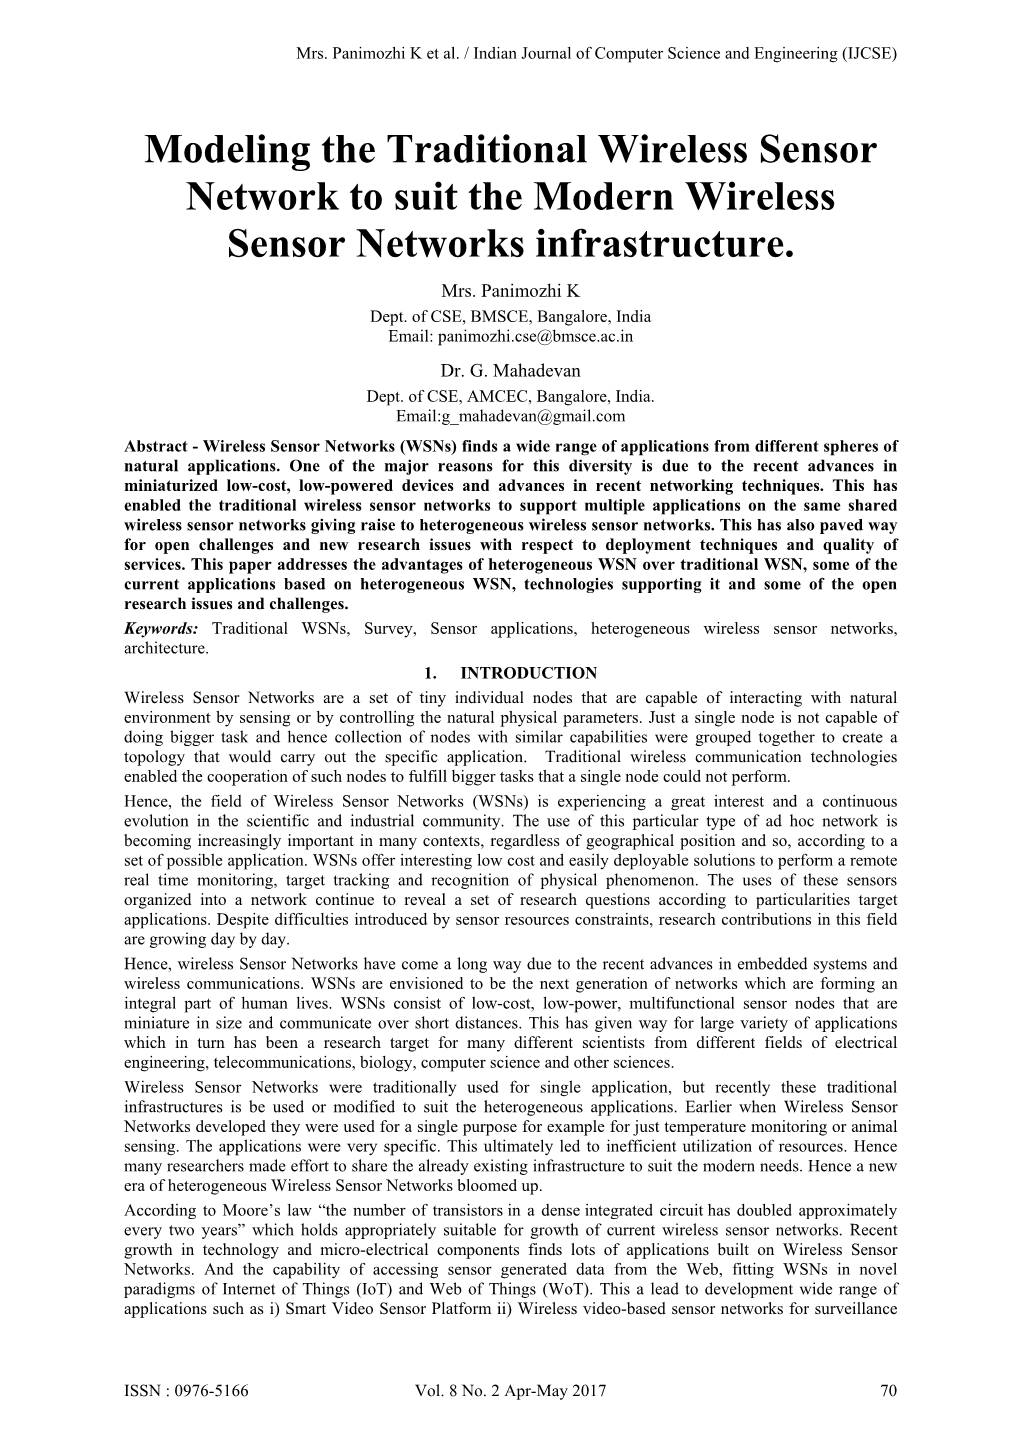 Modeling the Traditional Wireless Sensor Network to Suit the Modern Wireless Sensor Networks Infrastructure